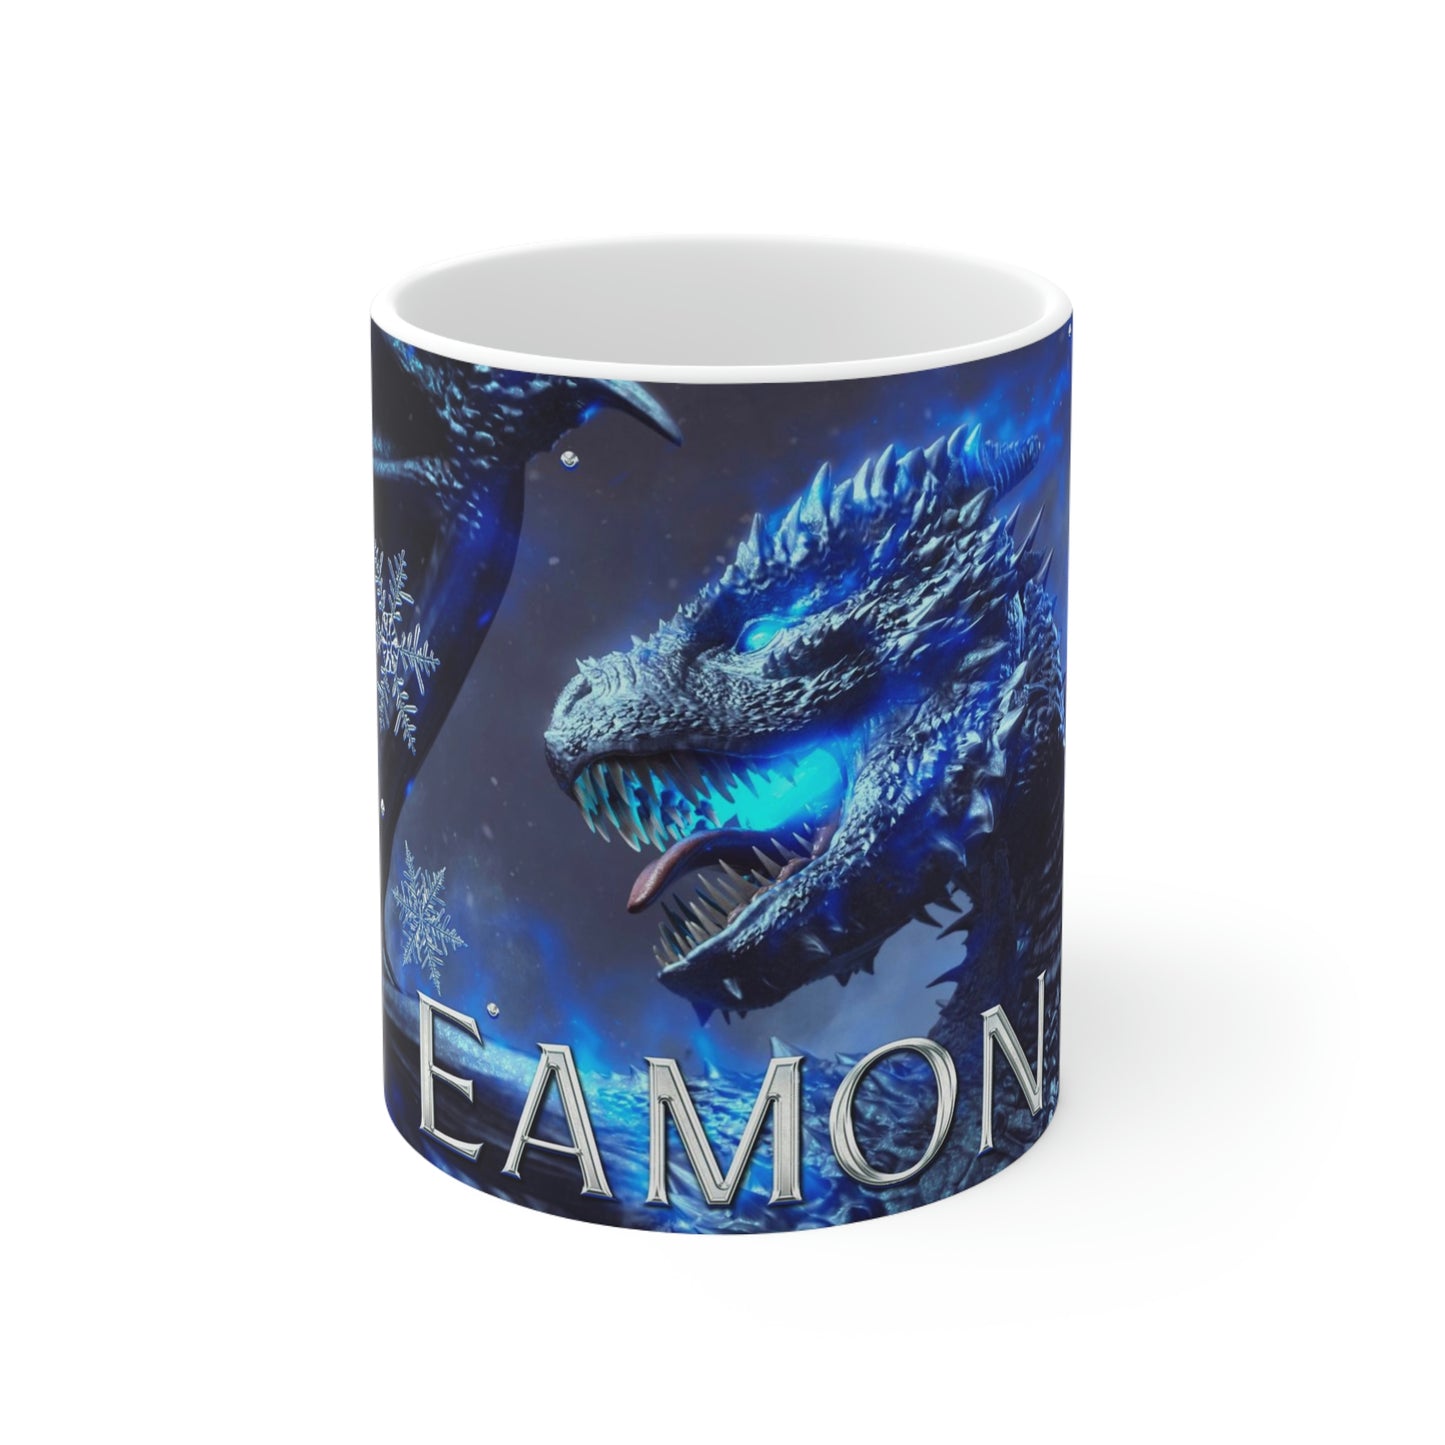 Eamon Art Work With Text Ceramic Mug 11oz